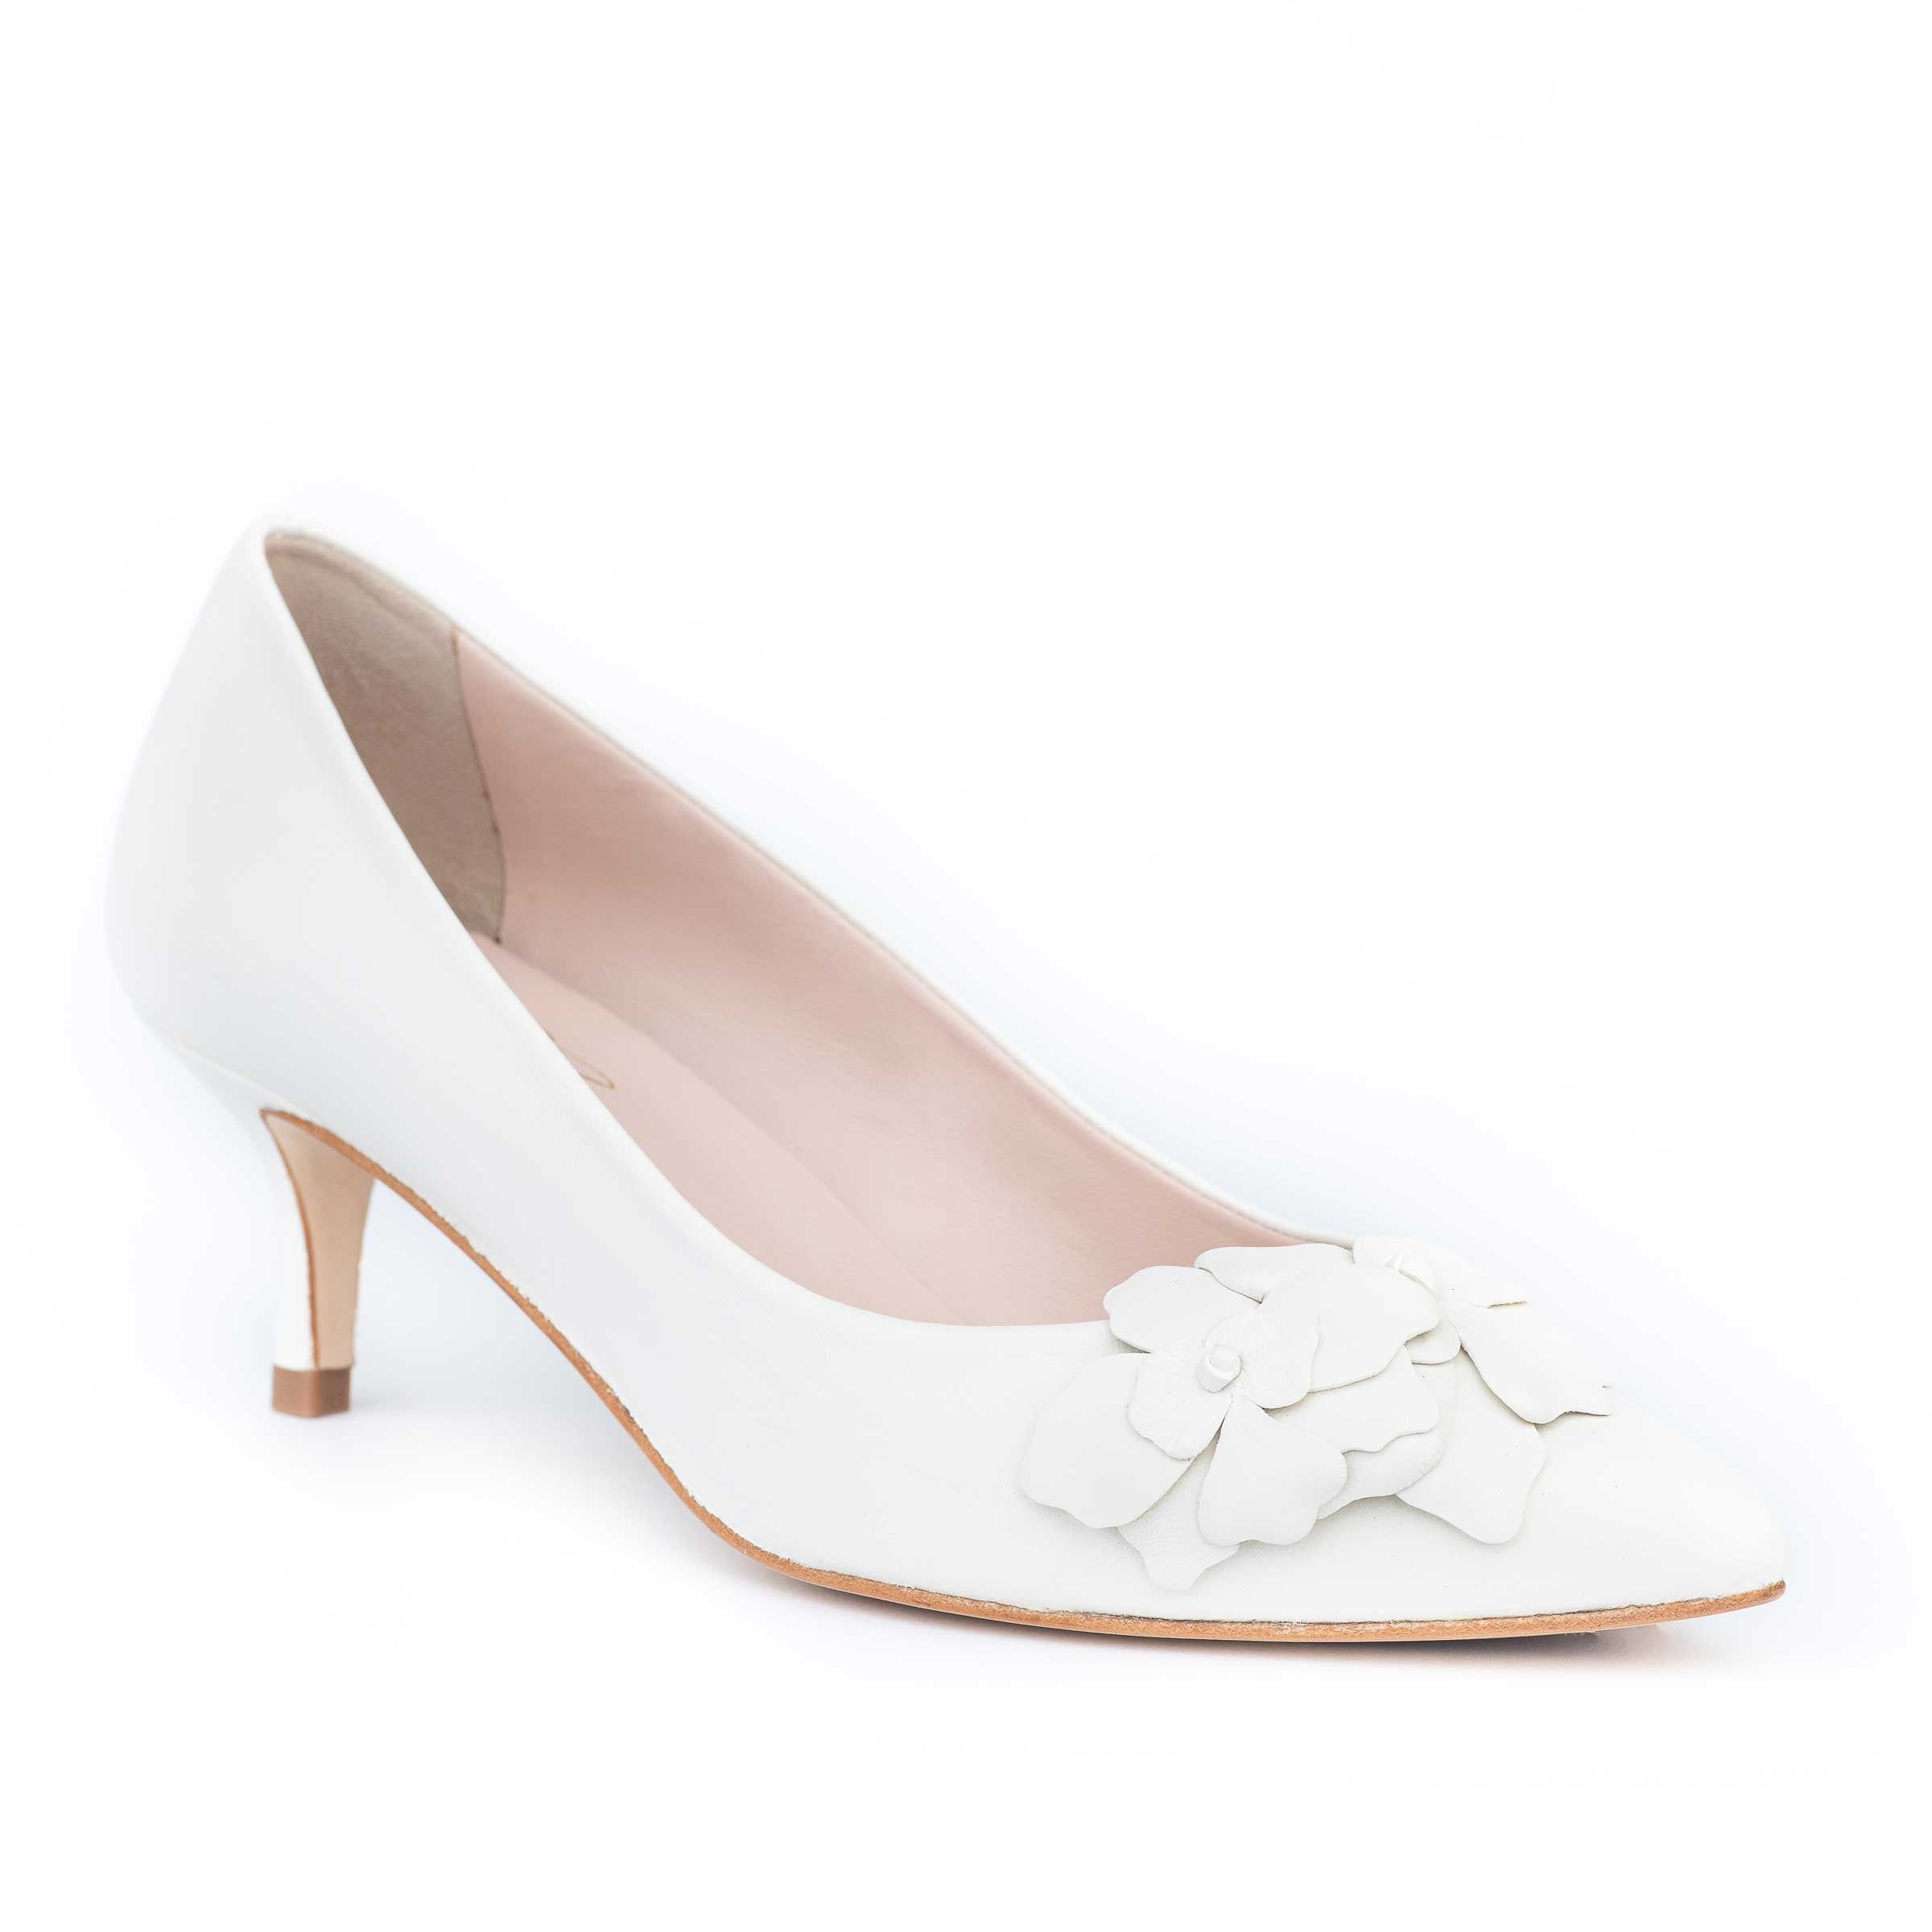 oleah flower heels off-white wedding heels, floral applique heels, floral heels, leather flower heels made in sheepskin leather